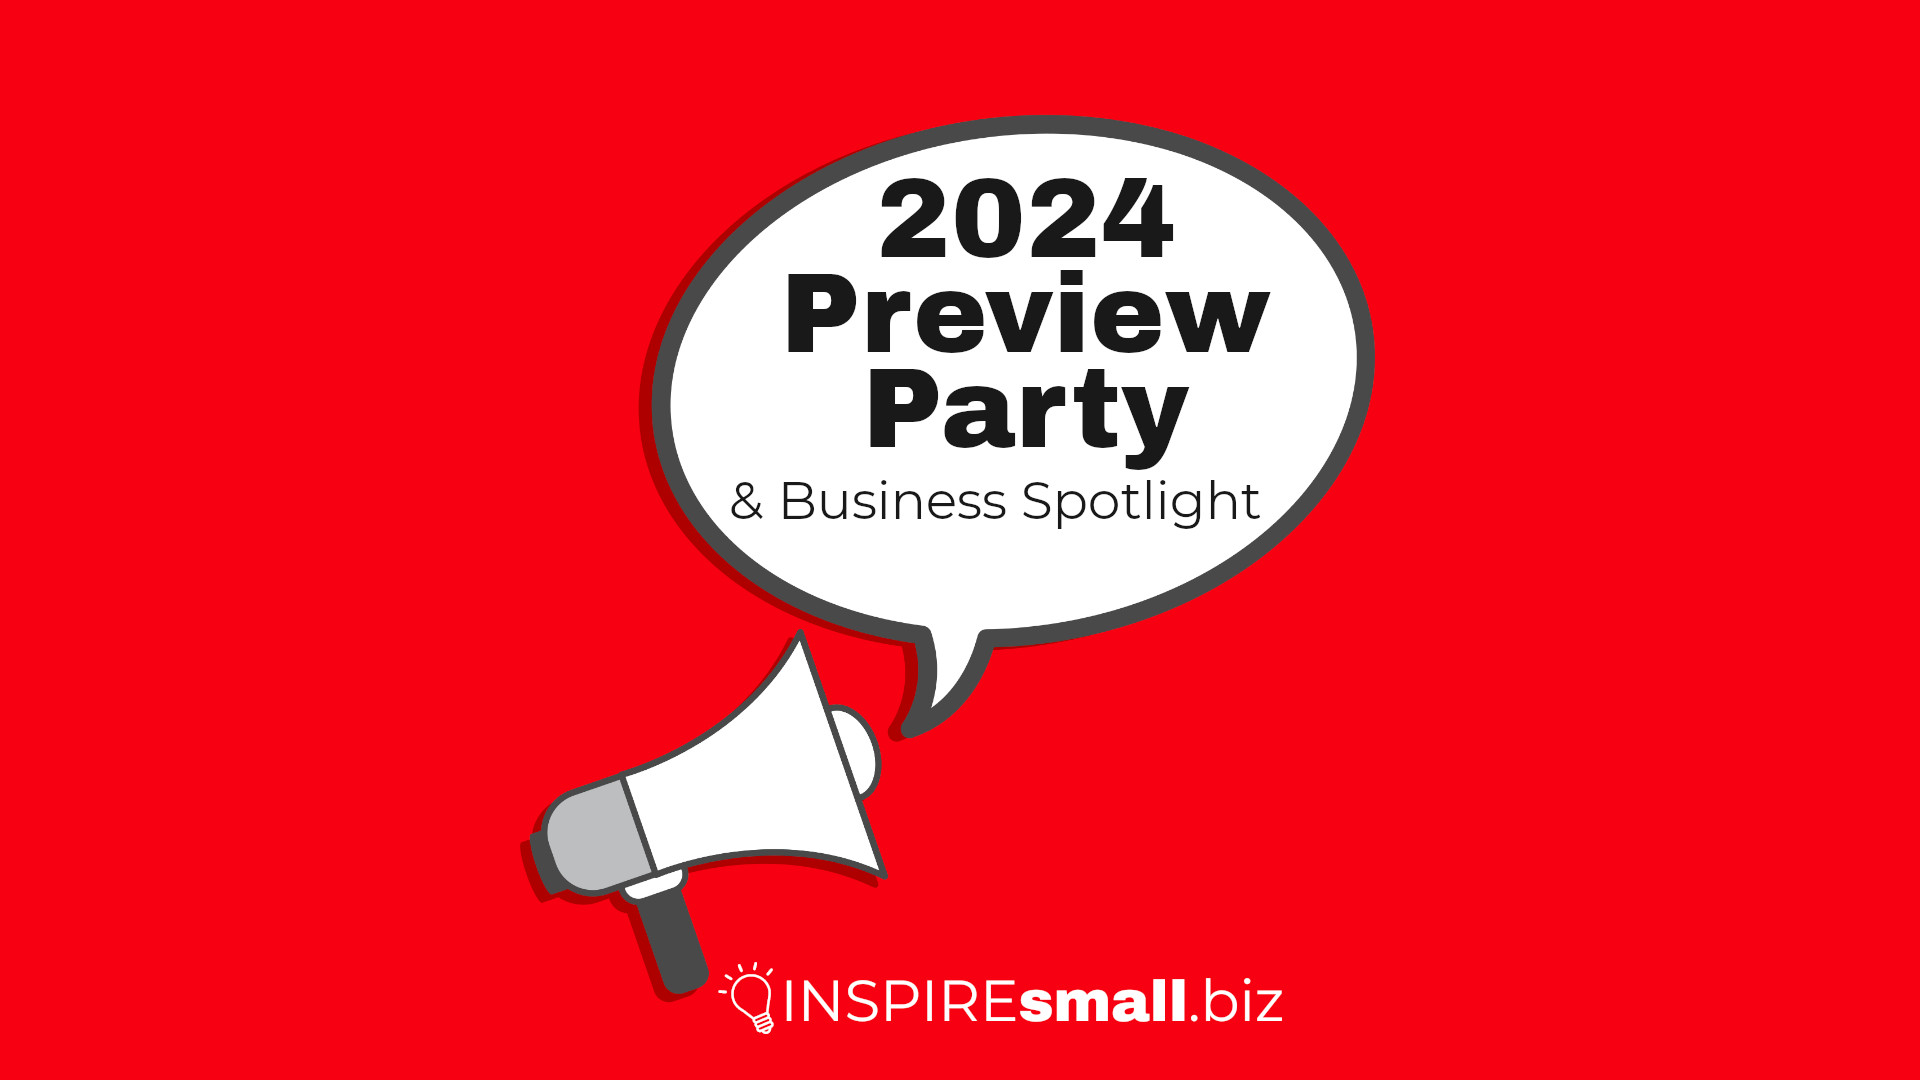 INSPIREsmall.biz 2024 Preview Party & Business Spotlight